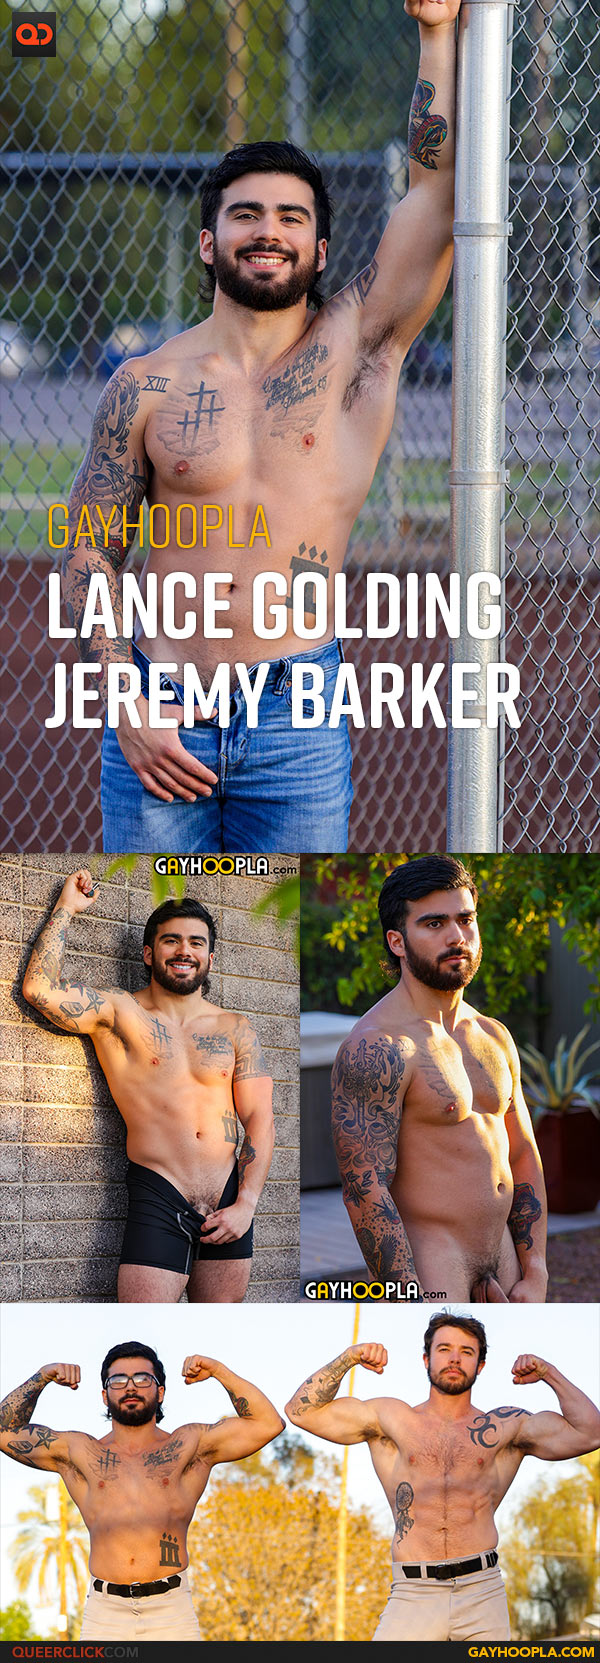 Gayhoopla: Lance Golding and Jeremy Barker - Lance Gets Some Bat Handling Tips From Coach Jeremy